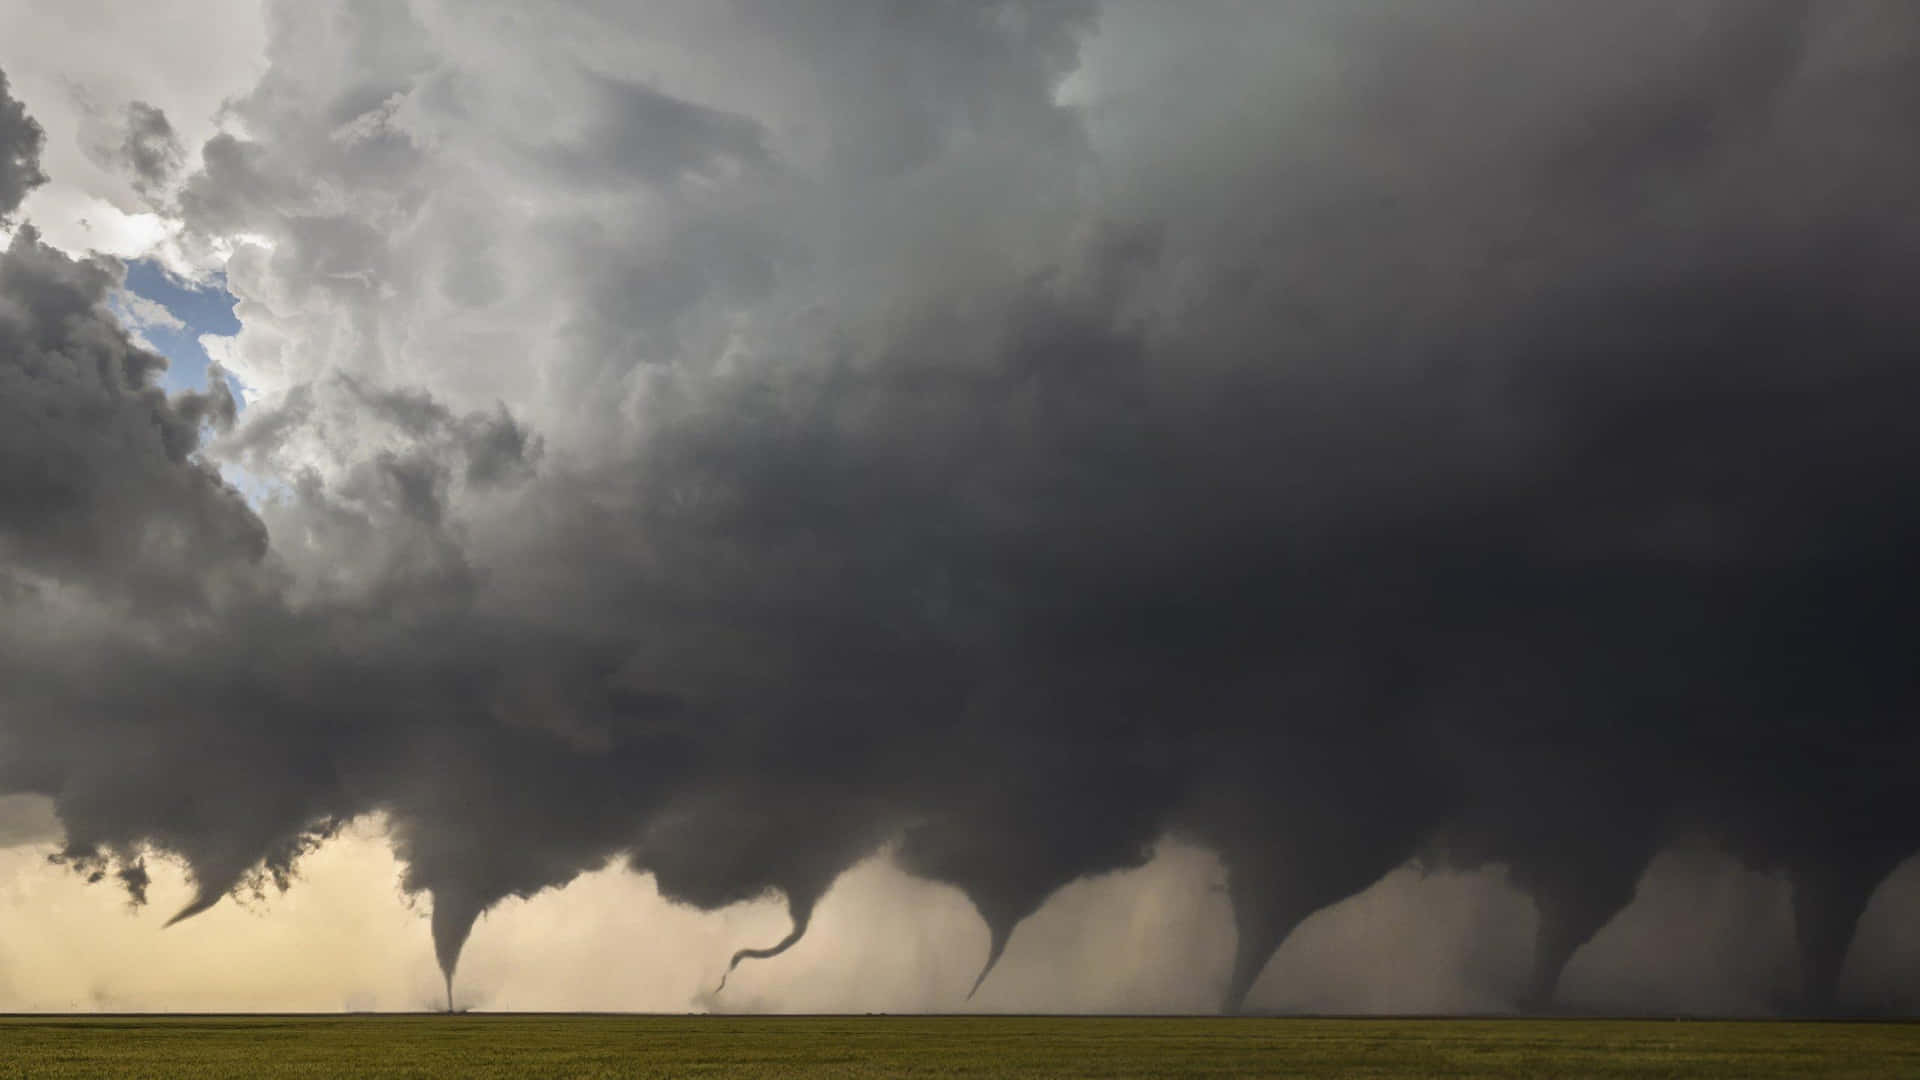 Captivating Tornado Formation Against a Stormy Sky